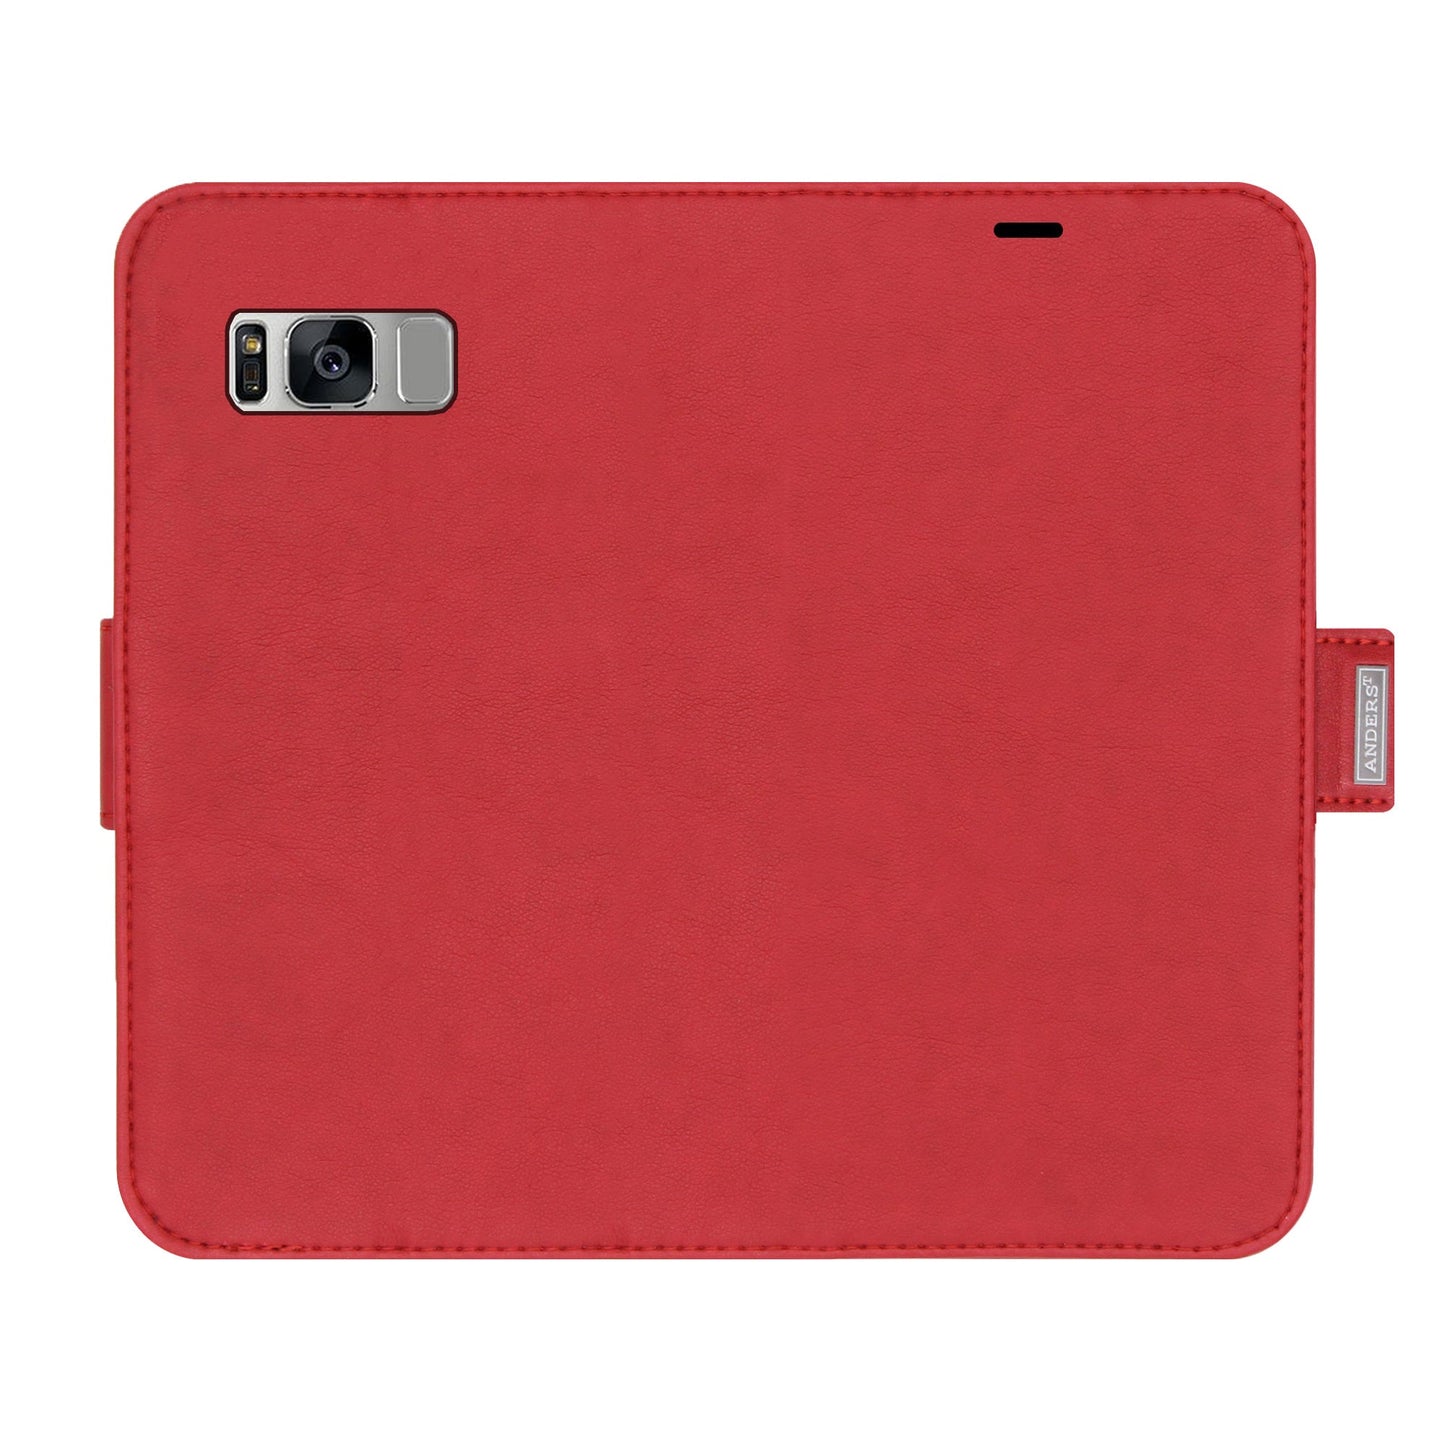 Coque Uni Rouge Victor pour Samsung Galaxy S8